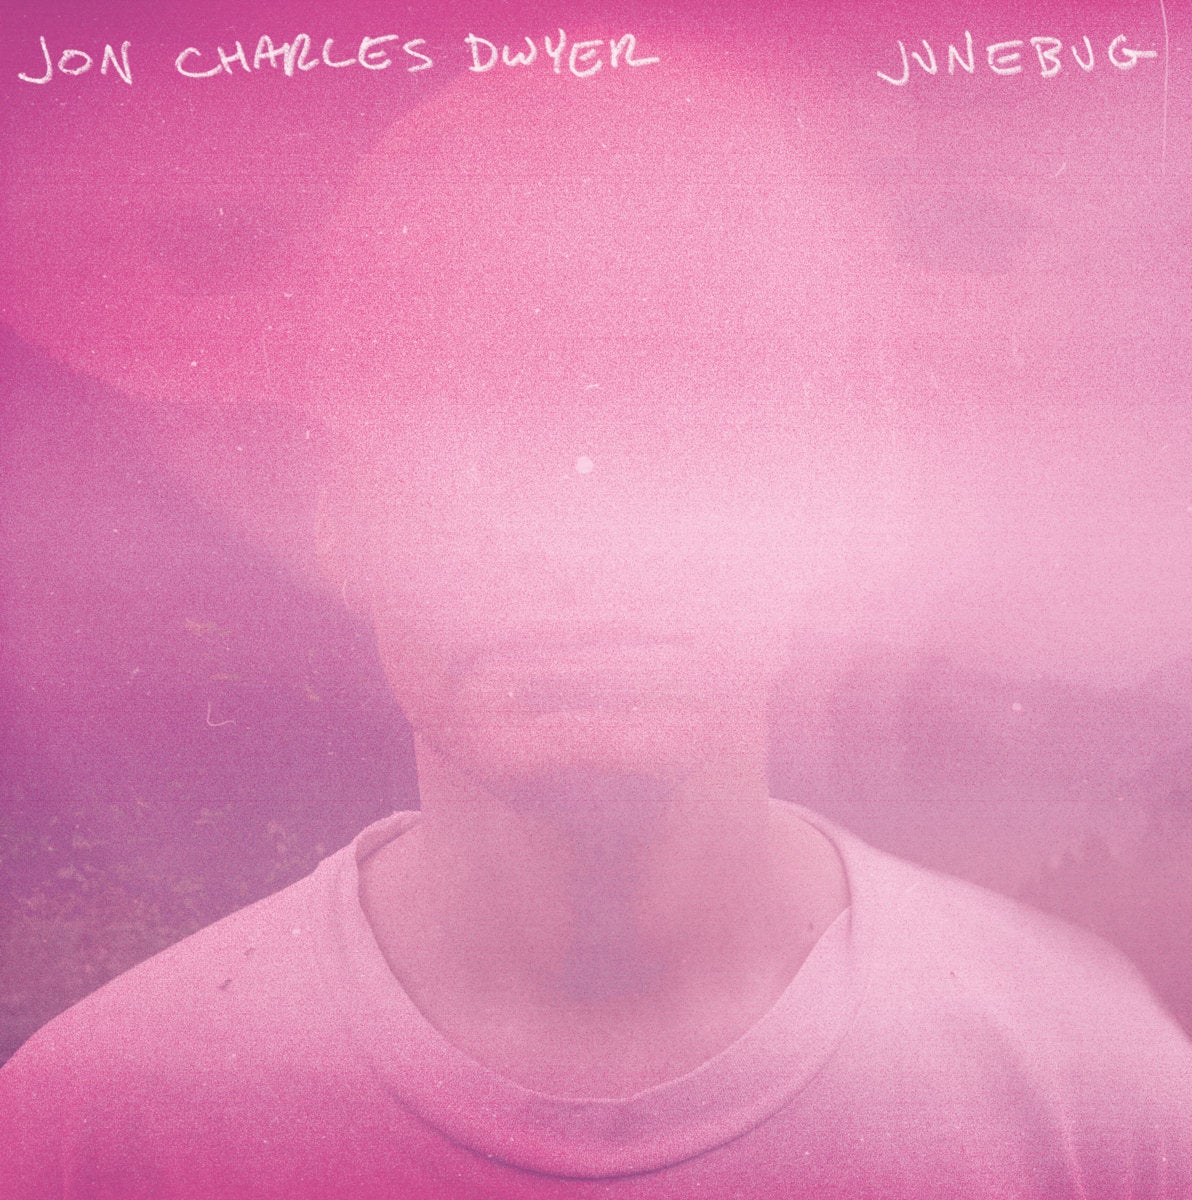 Jon Charles Dwyer "Junebug" CD